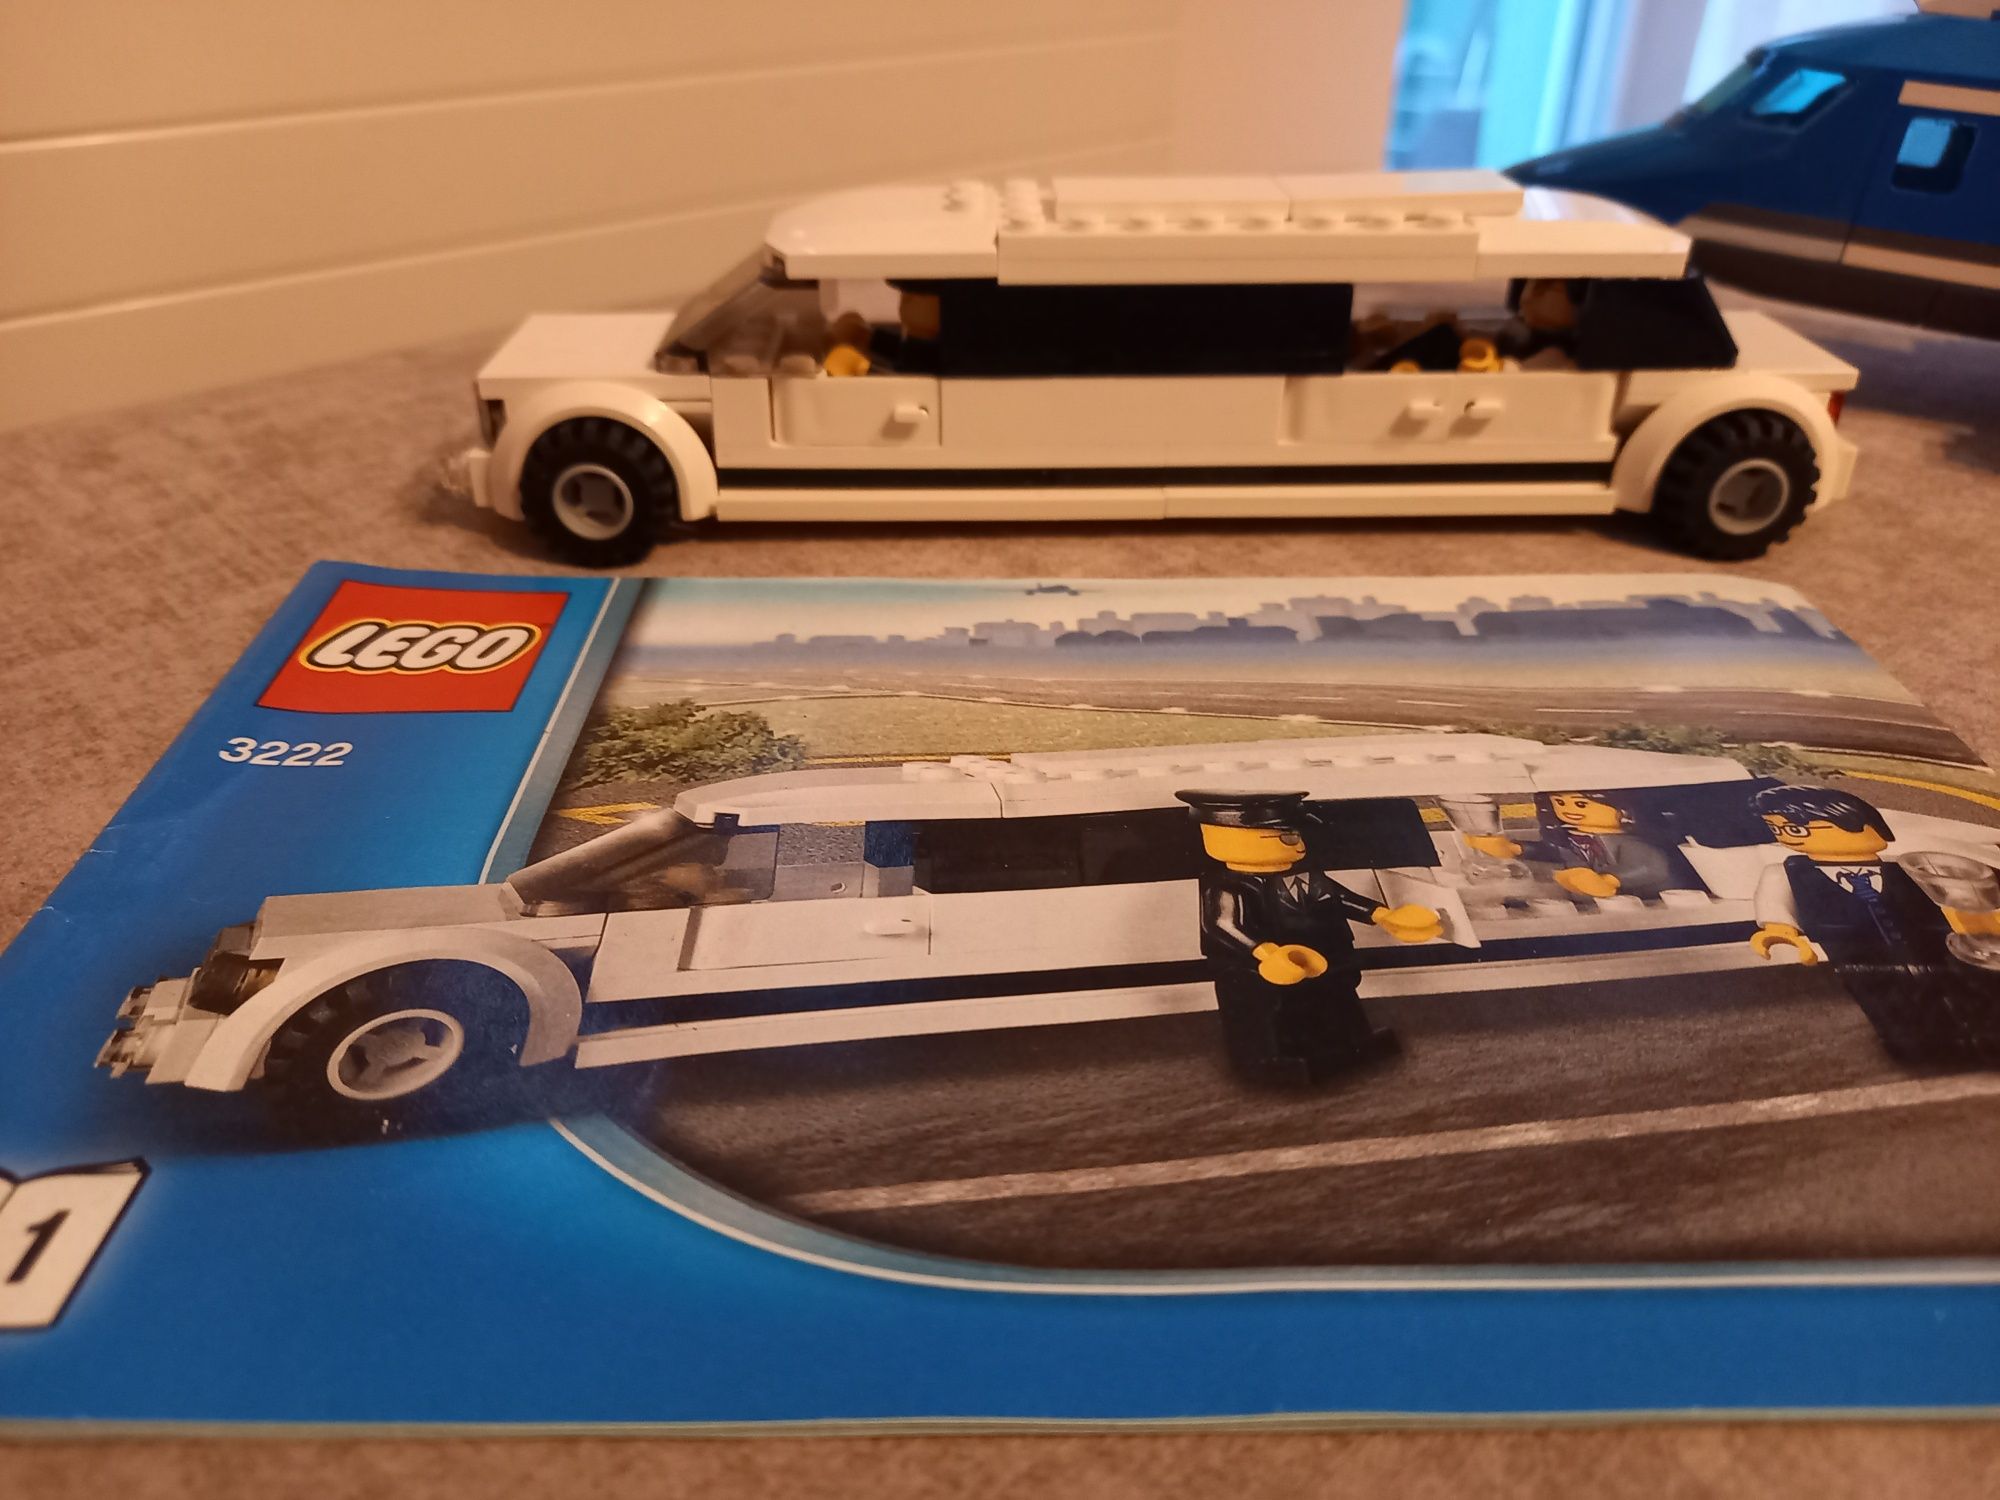 Lego 3222 zestaw